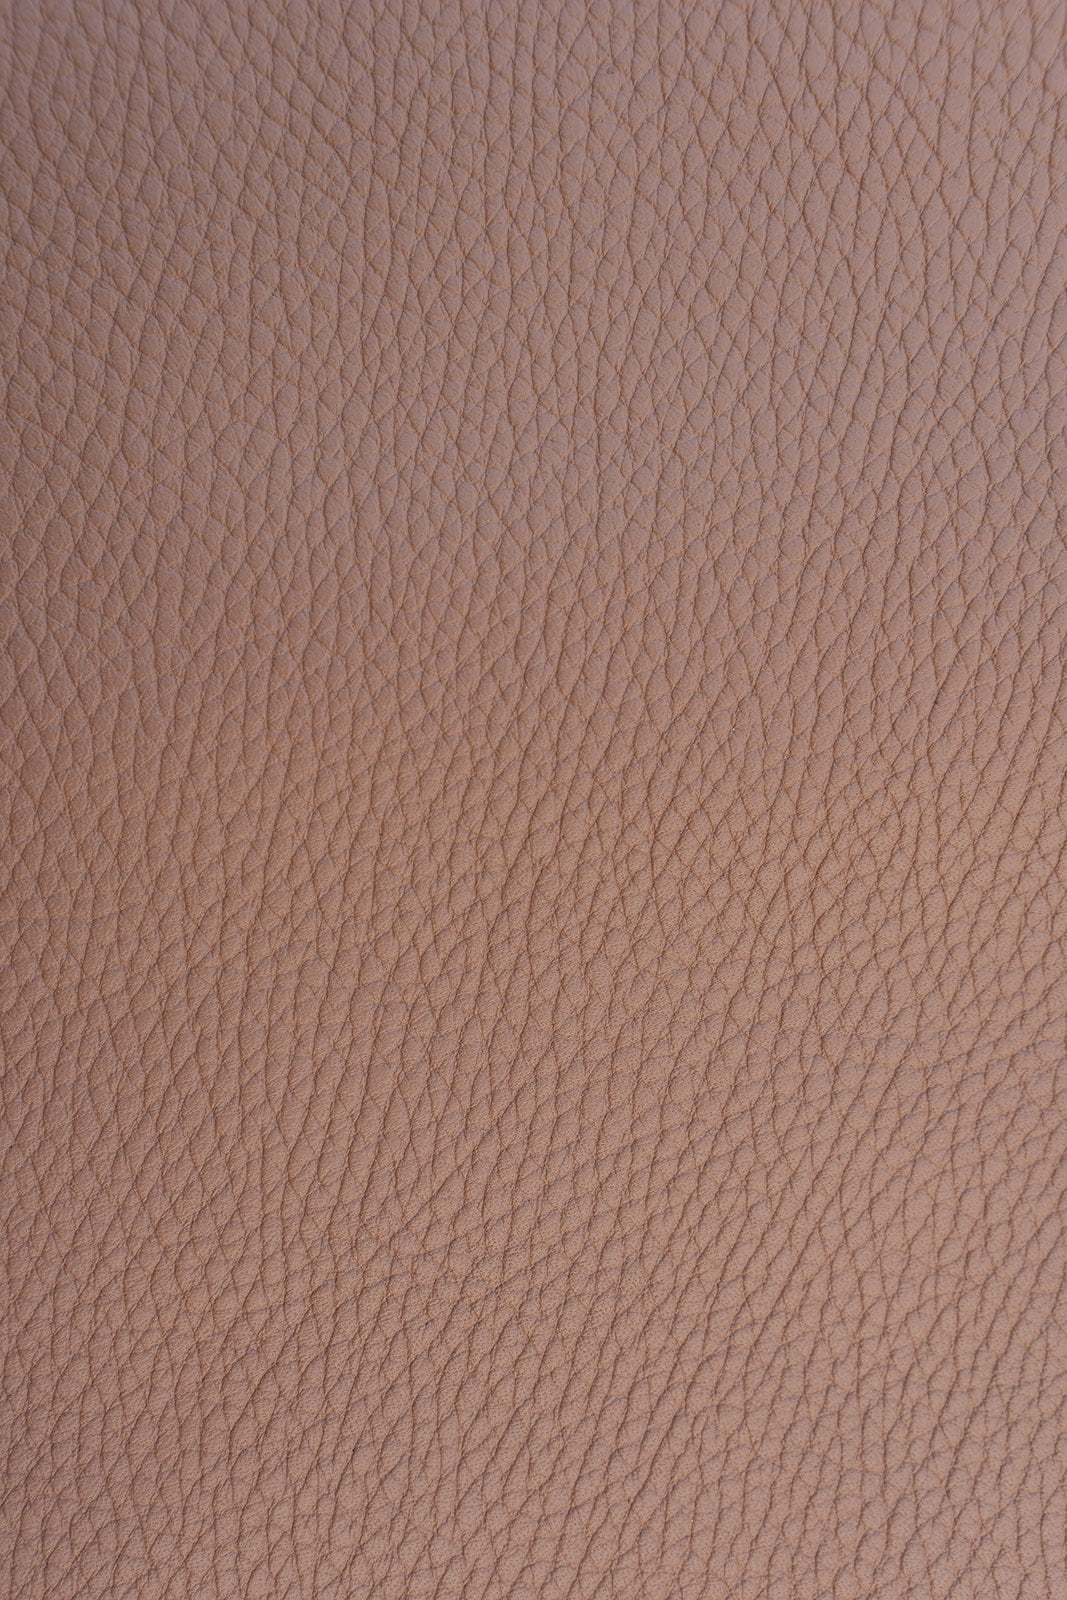 JL wallet leather - Warm sand